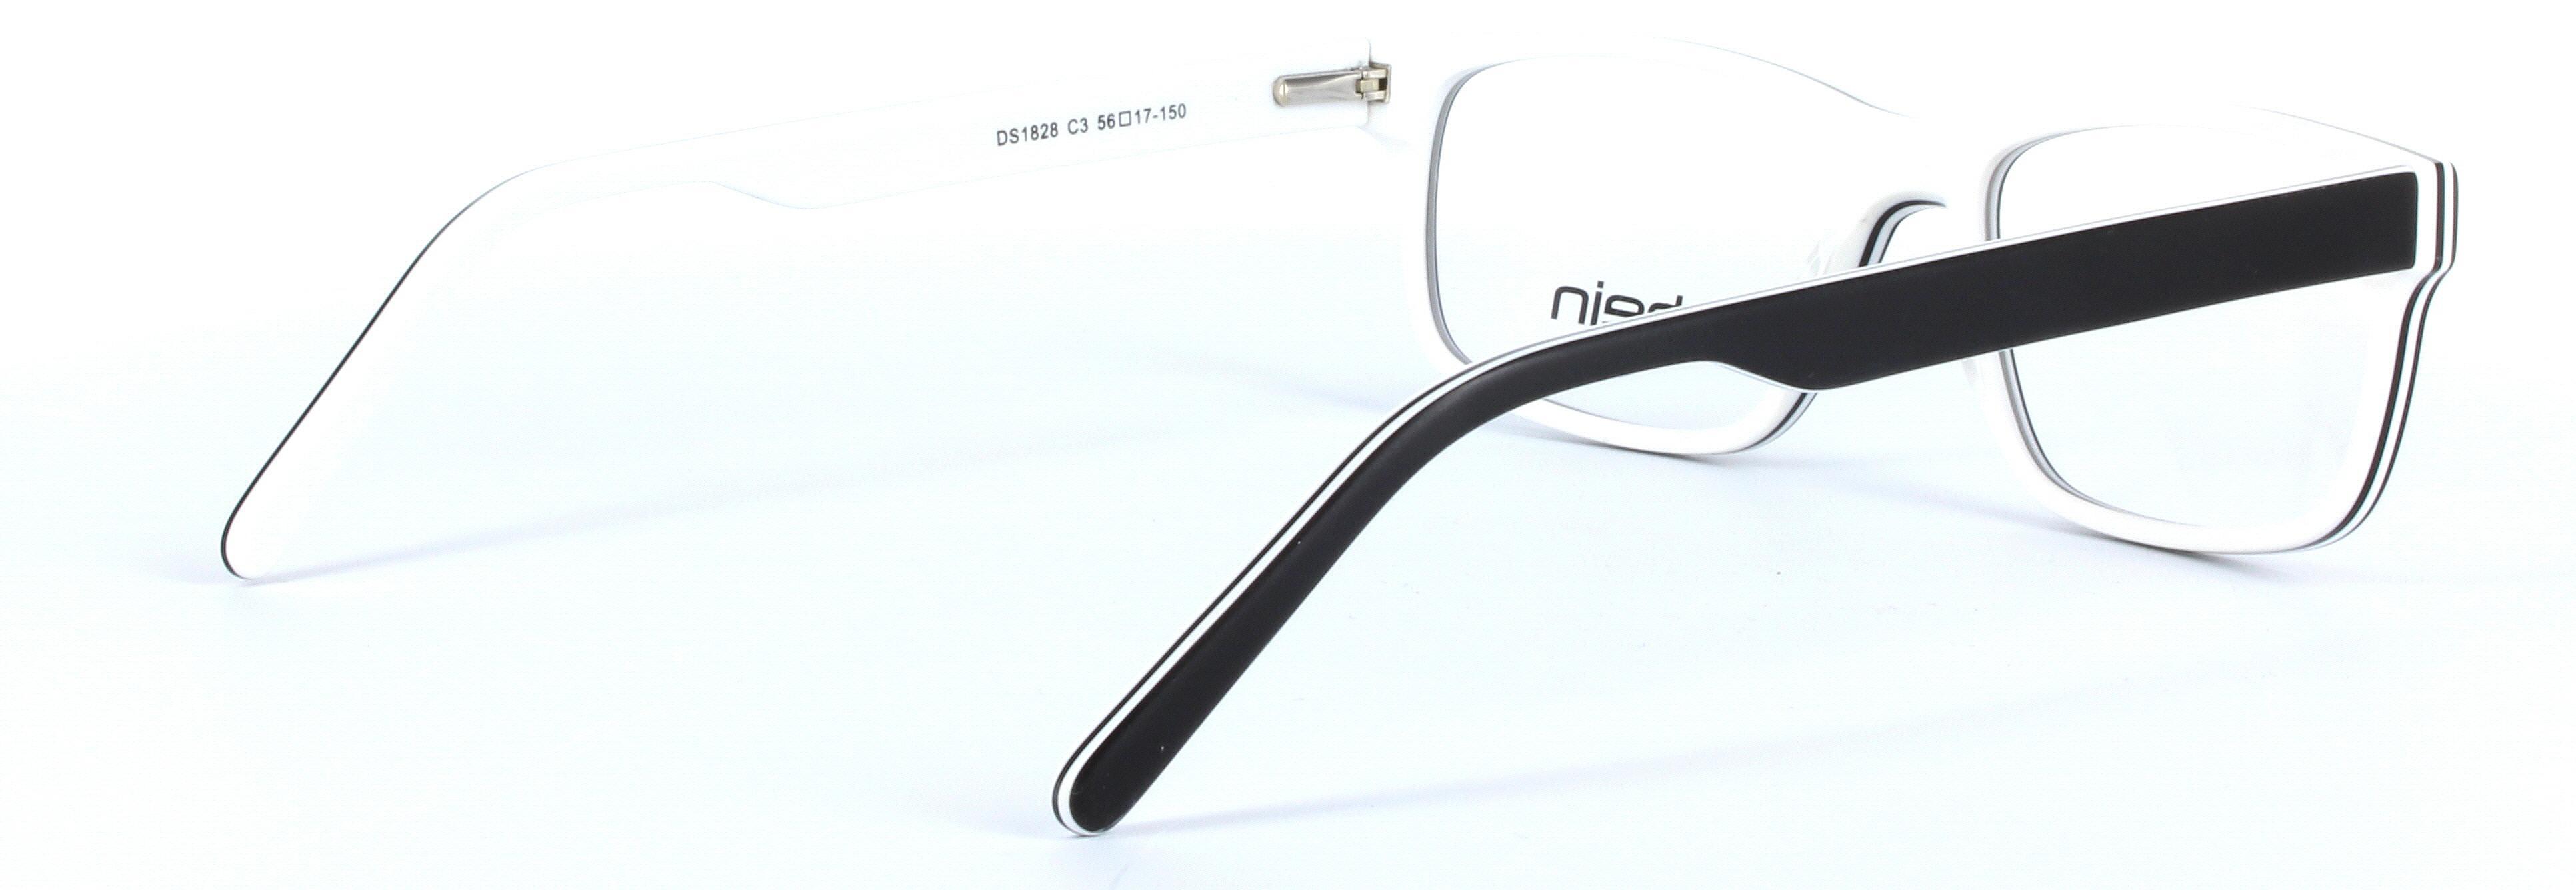 Carson Black and White Full Rim Oval Rectangular Plastic Glasses - Image View 4